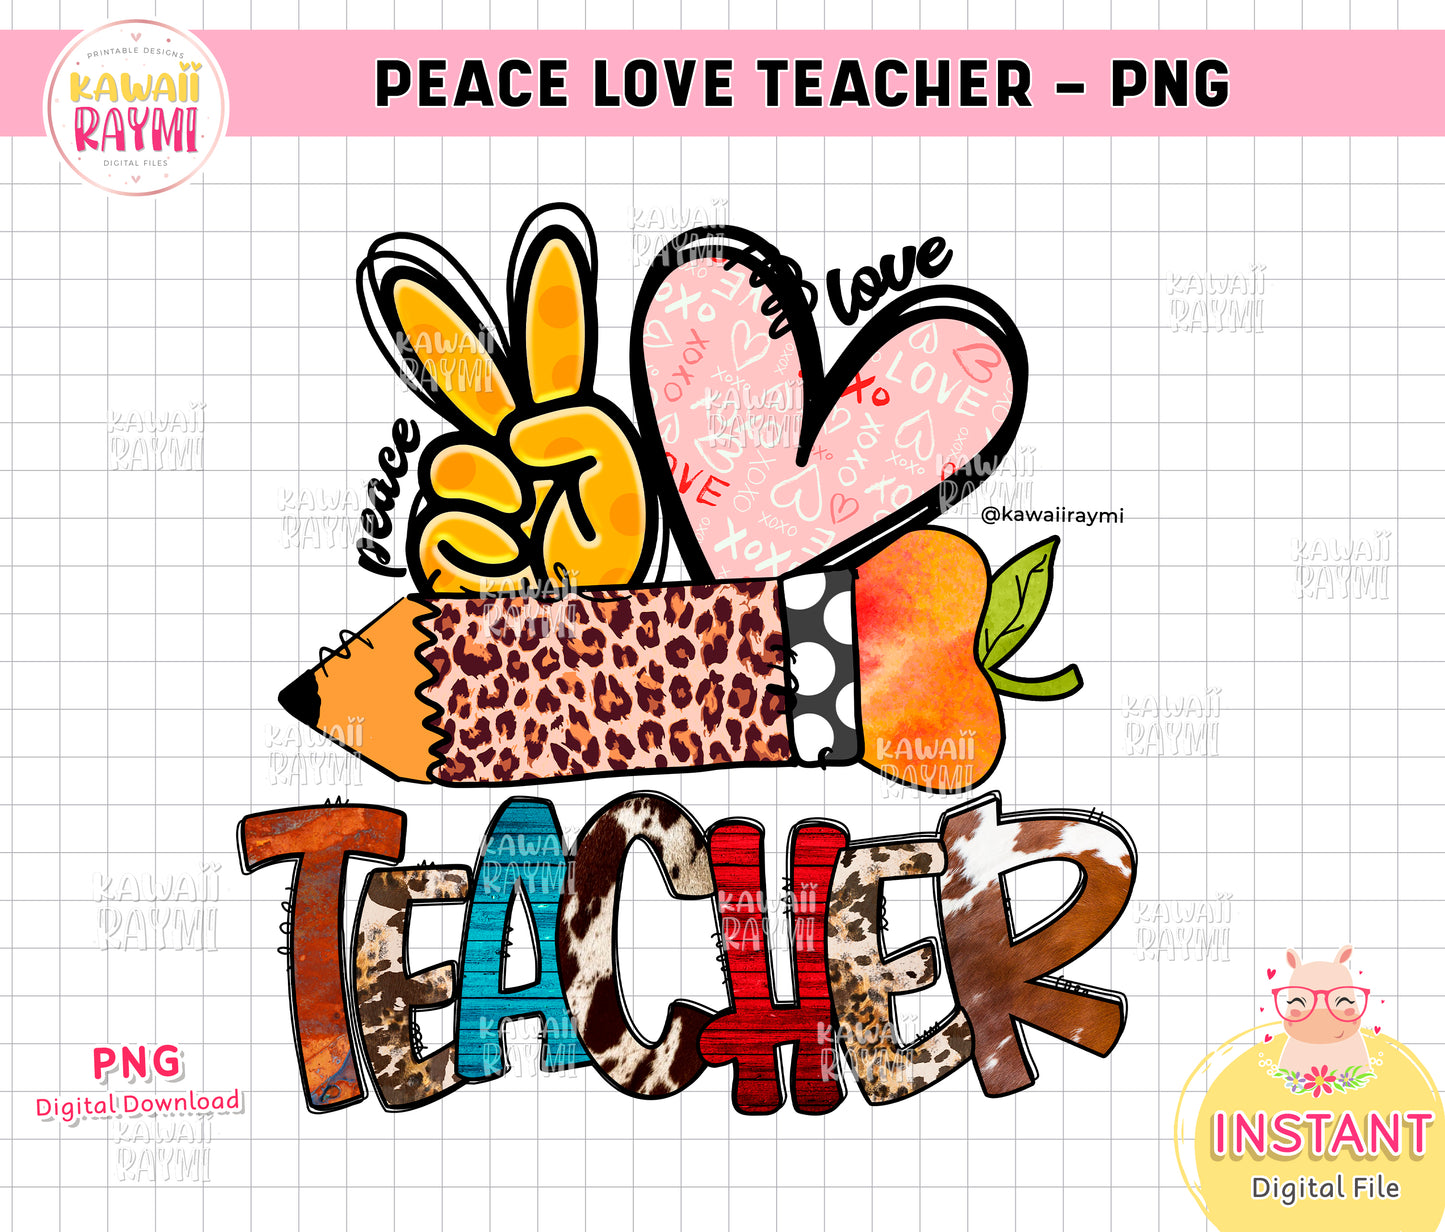 Peace love teacher png, sublimation teacher, Peace hand sign PNG, instant digital download